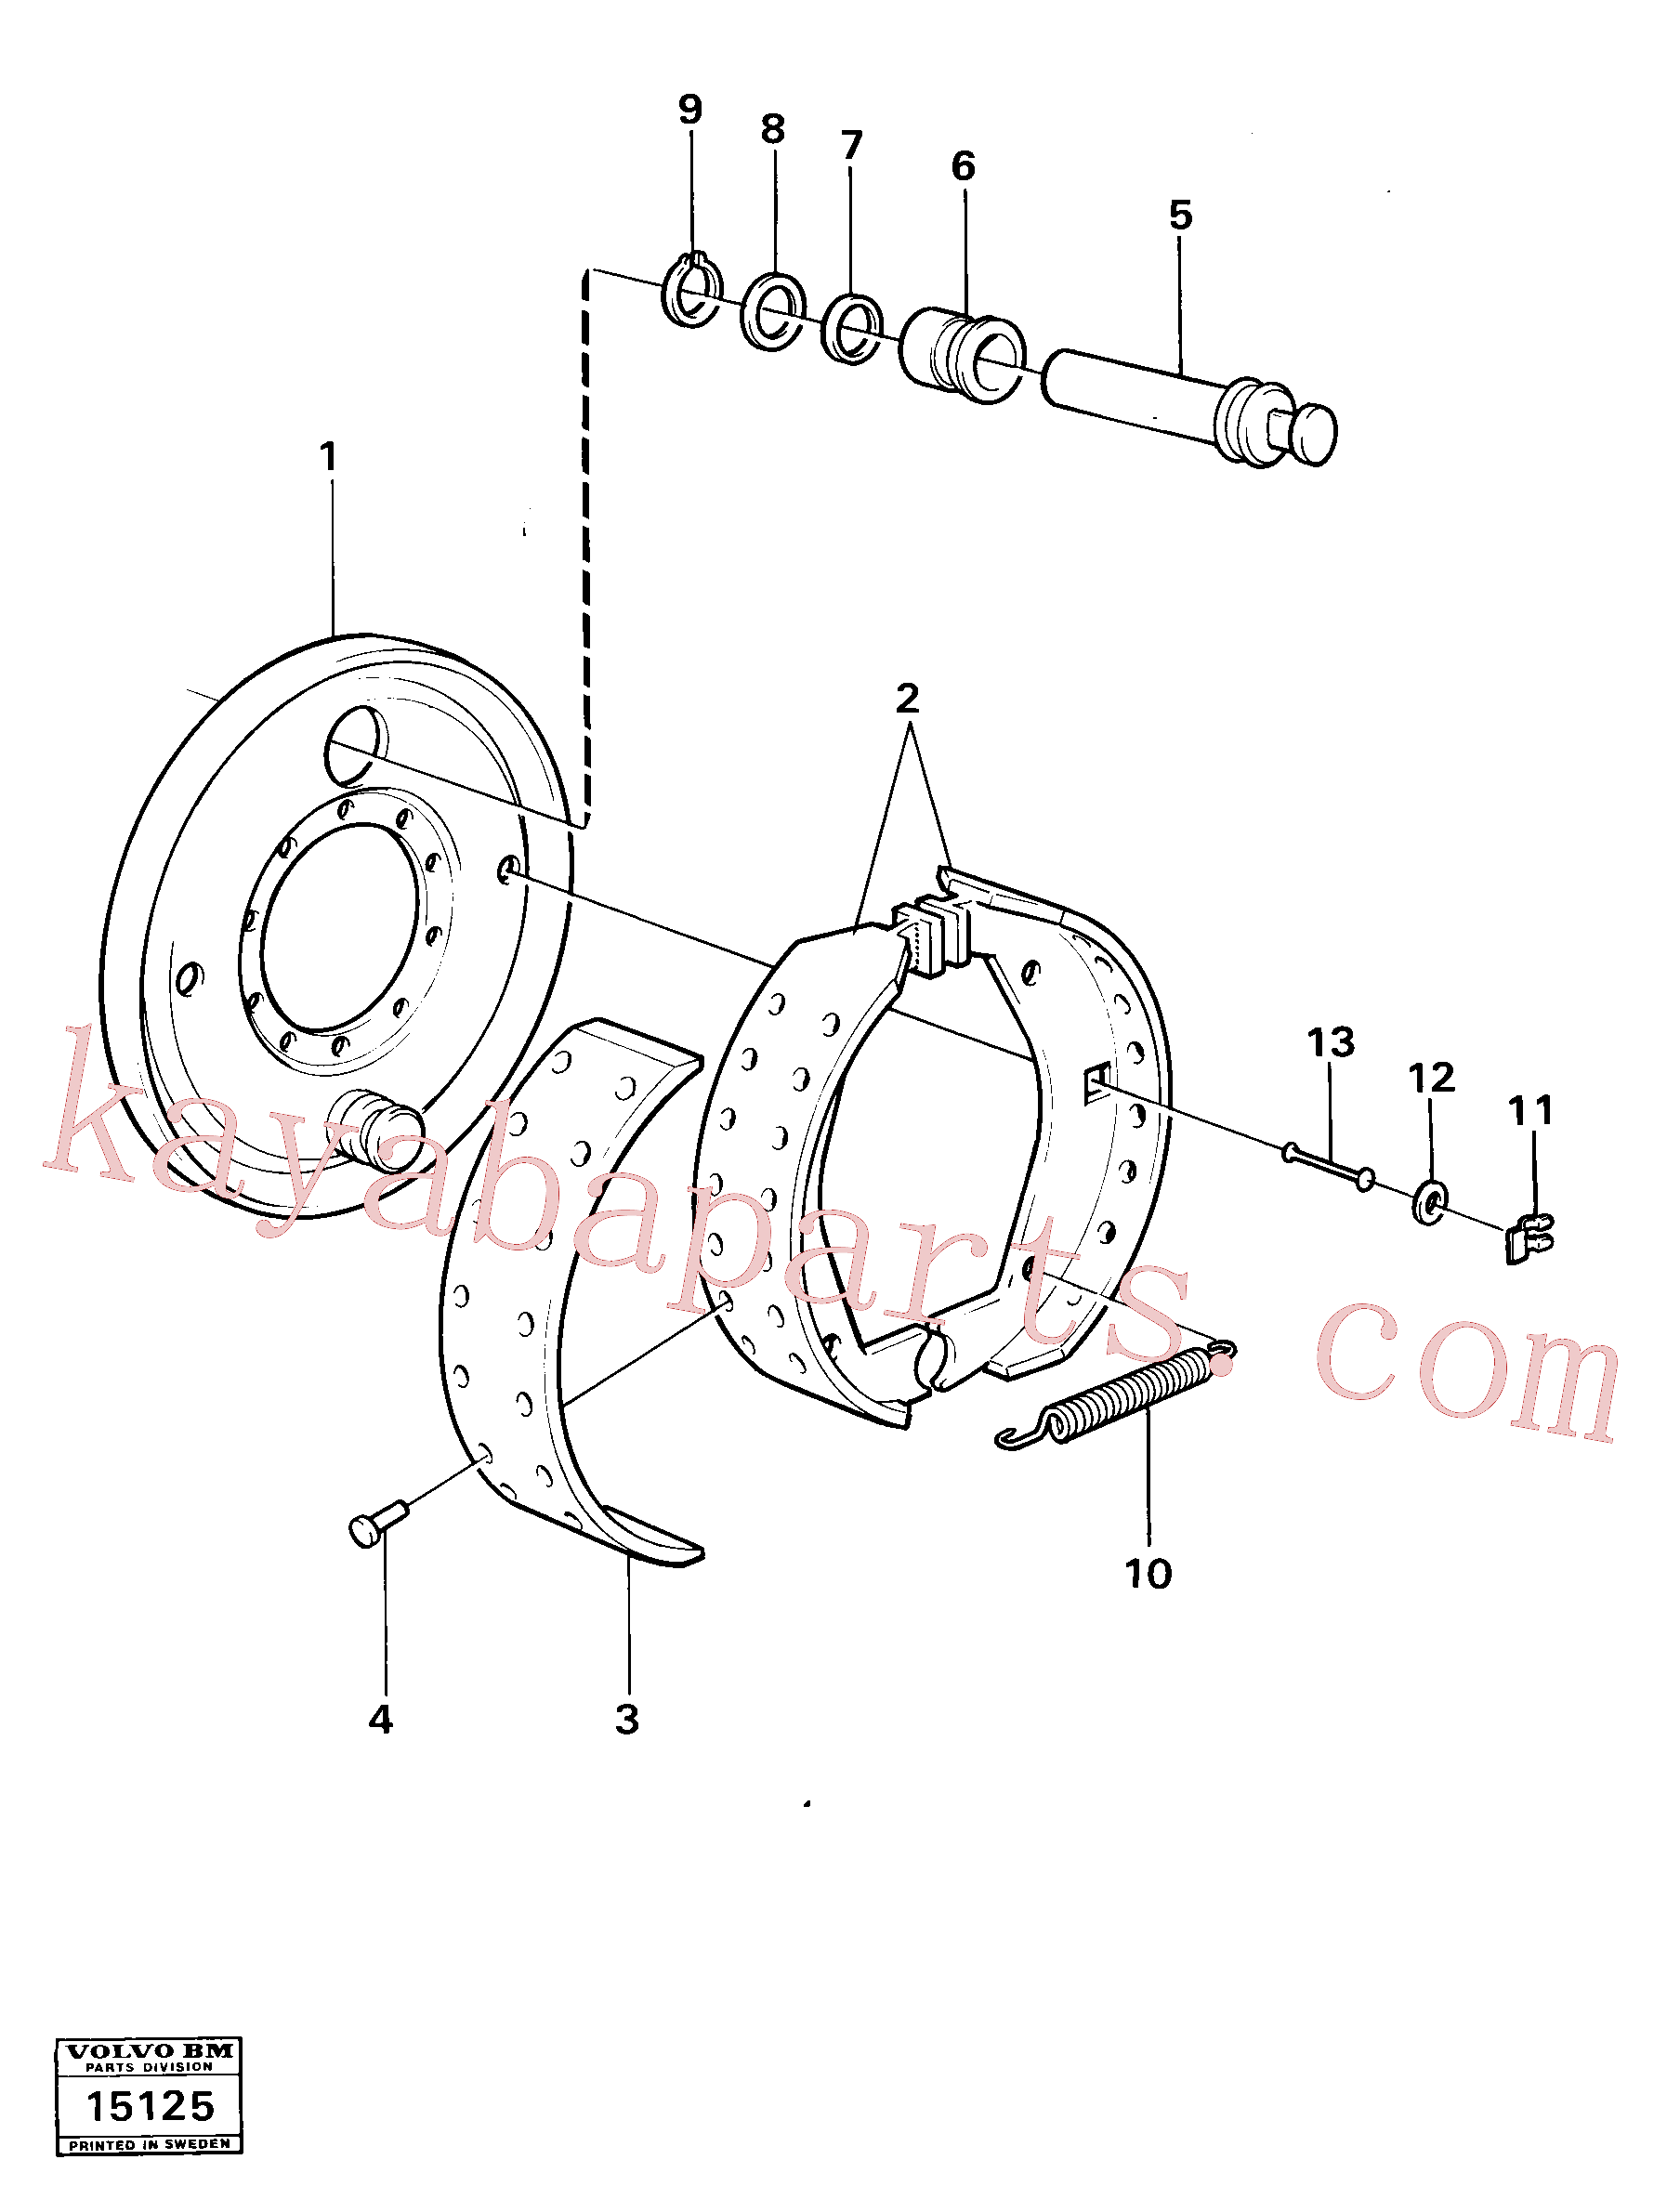 VOE951078 for Volvo Brake(15125 assembly)